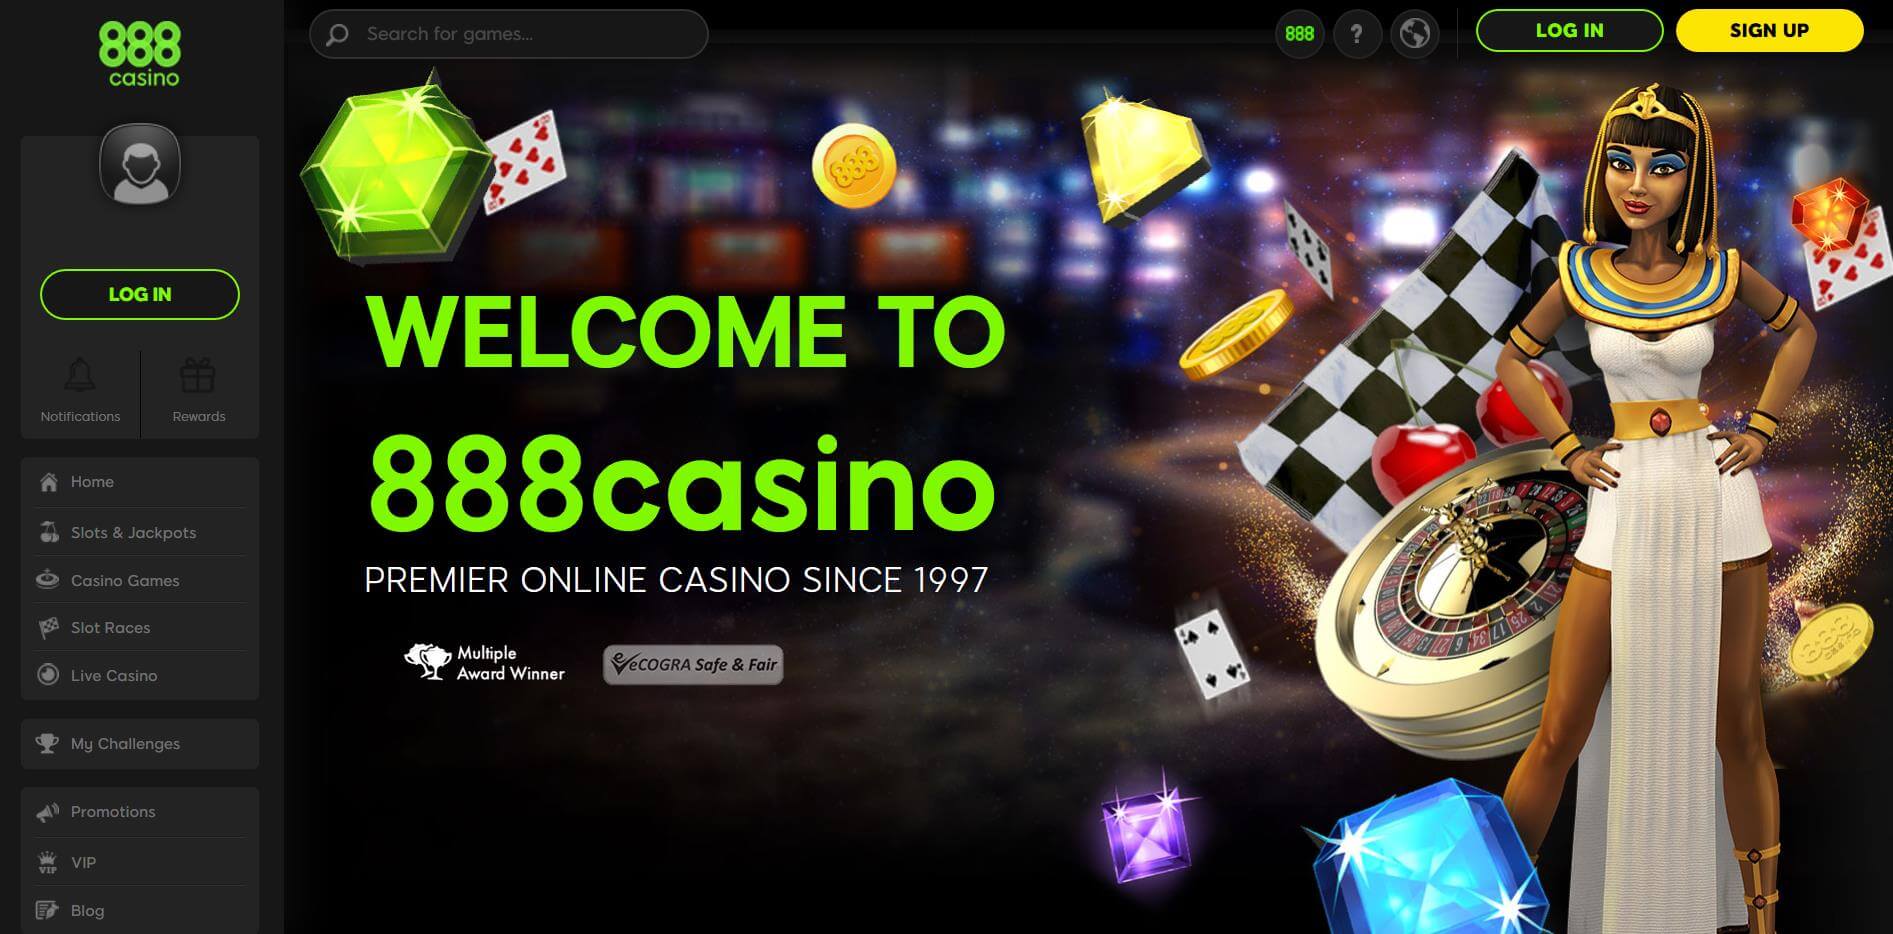 888 Casino Online Login